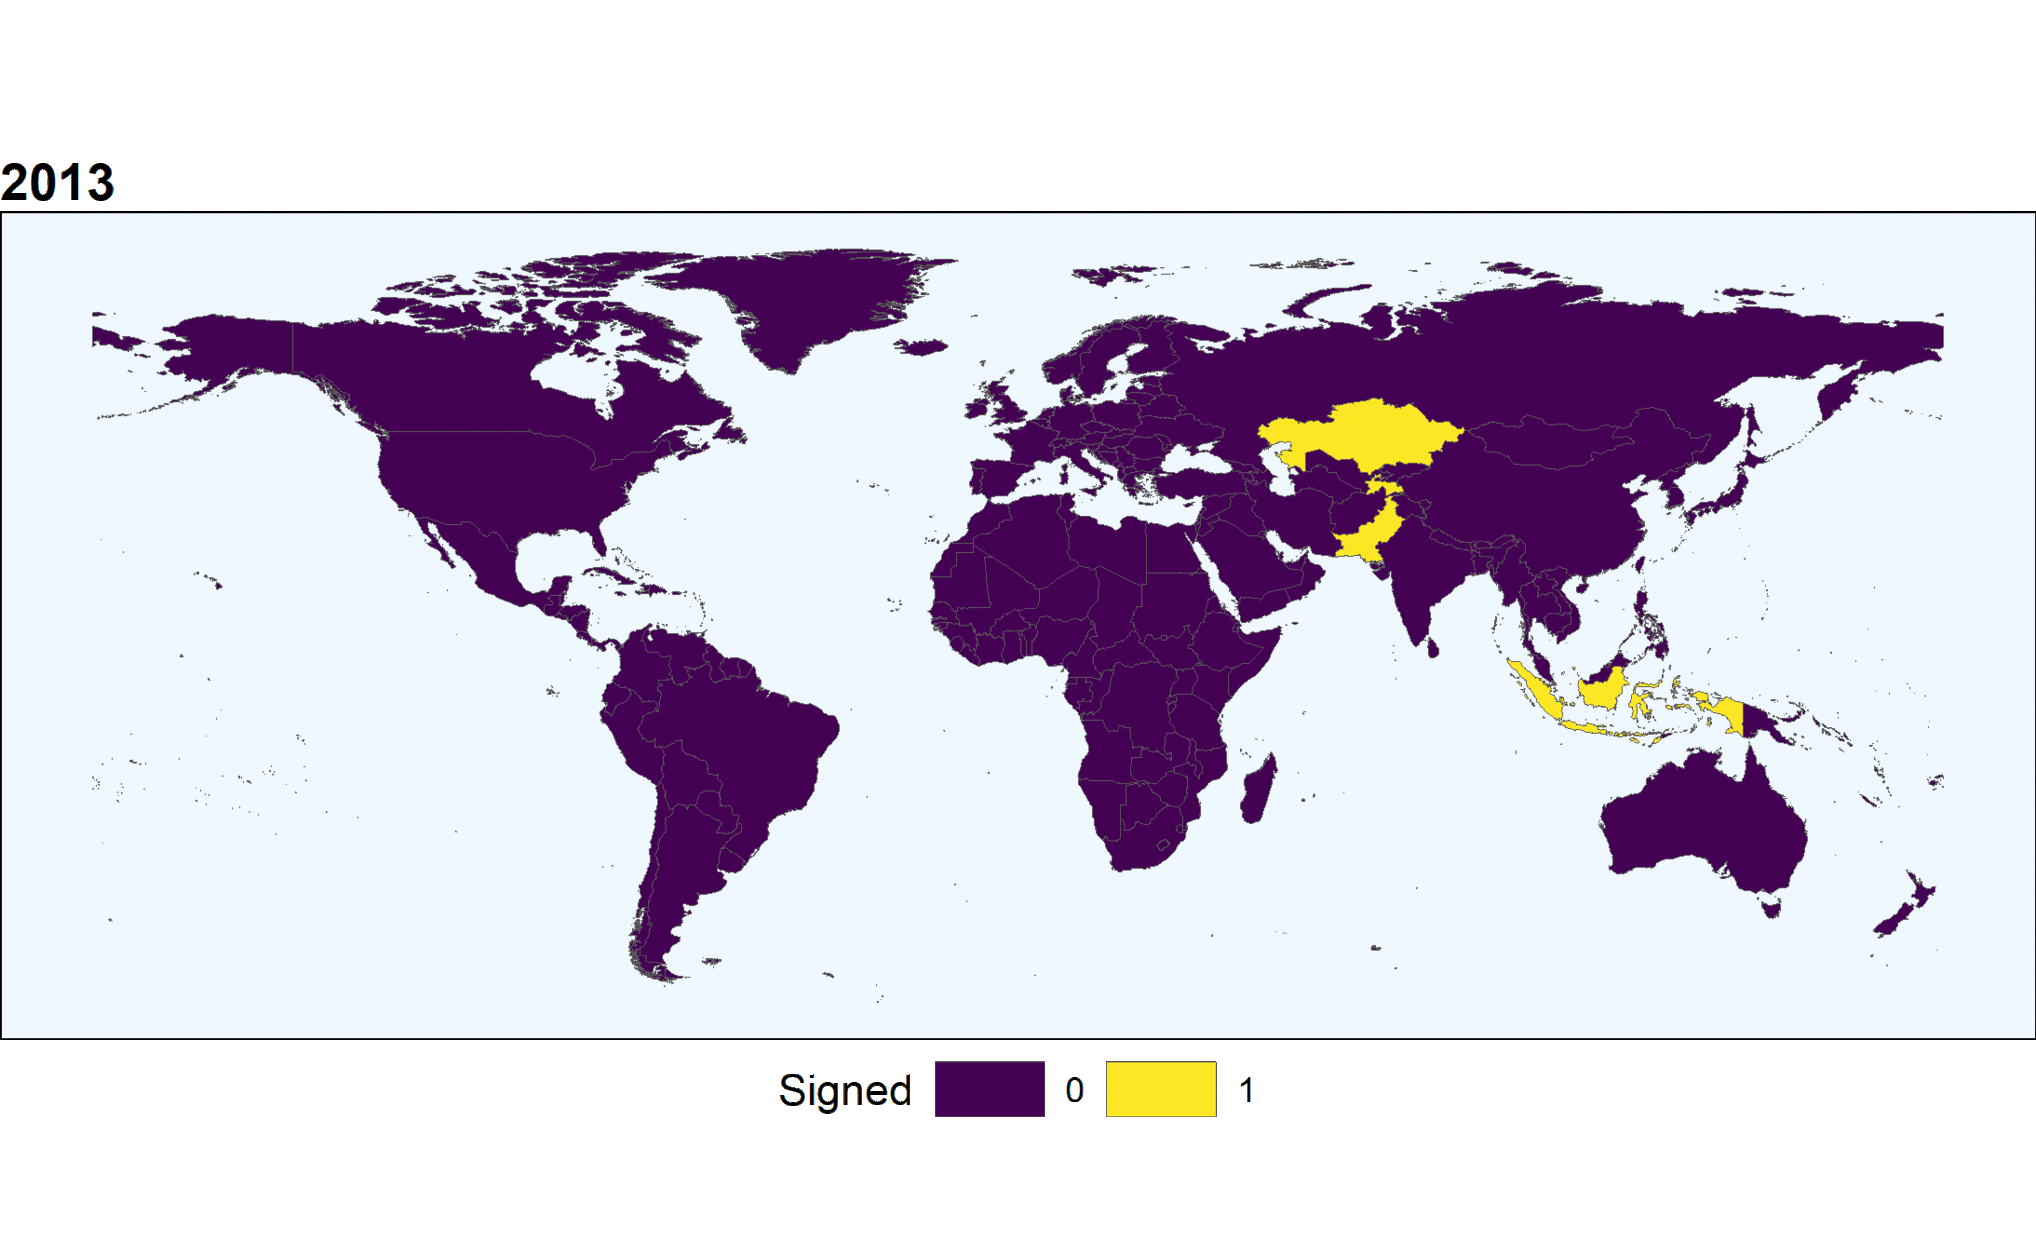 Global membership over time